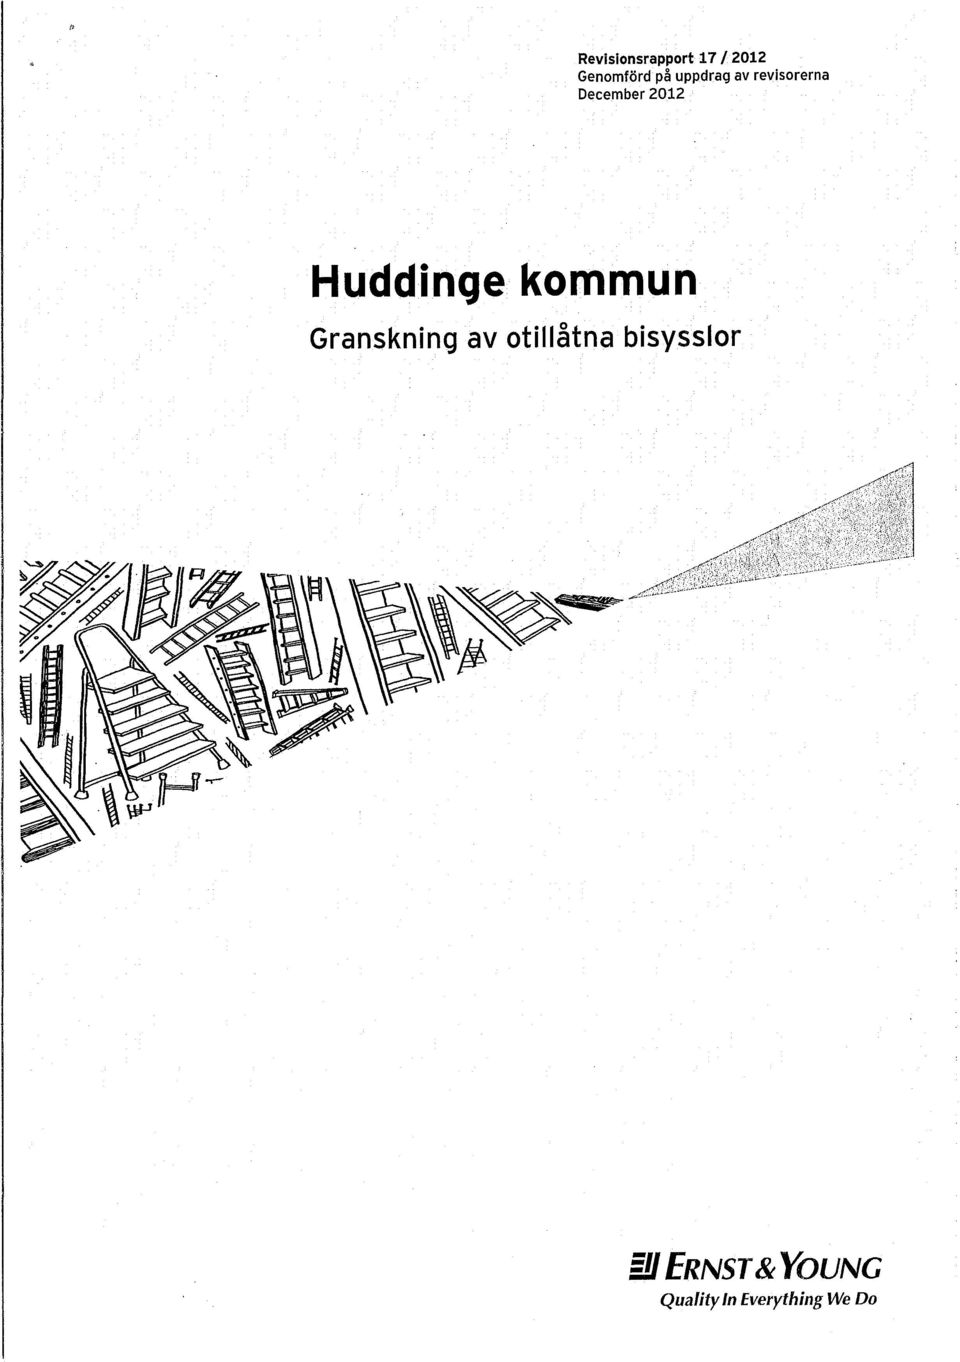 December 2012 Huddinge kommun